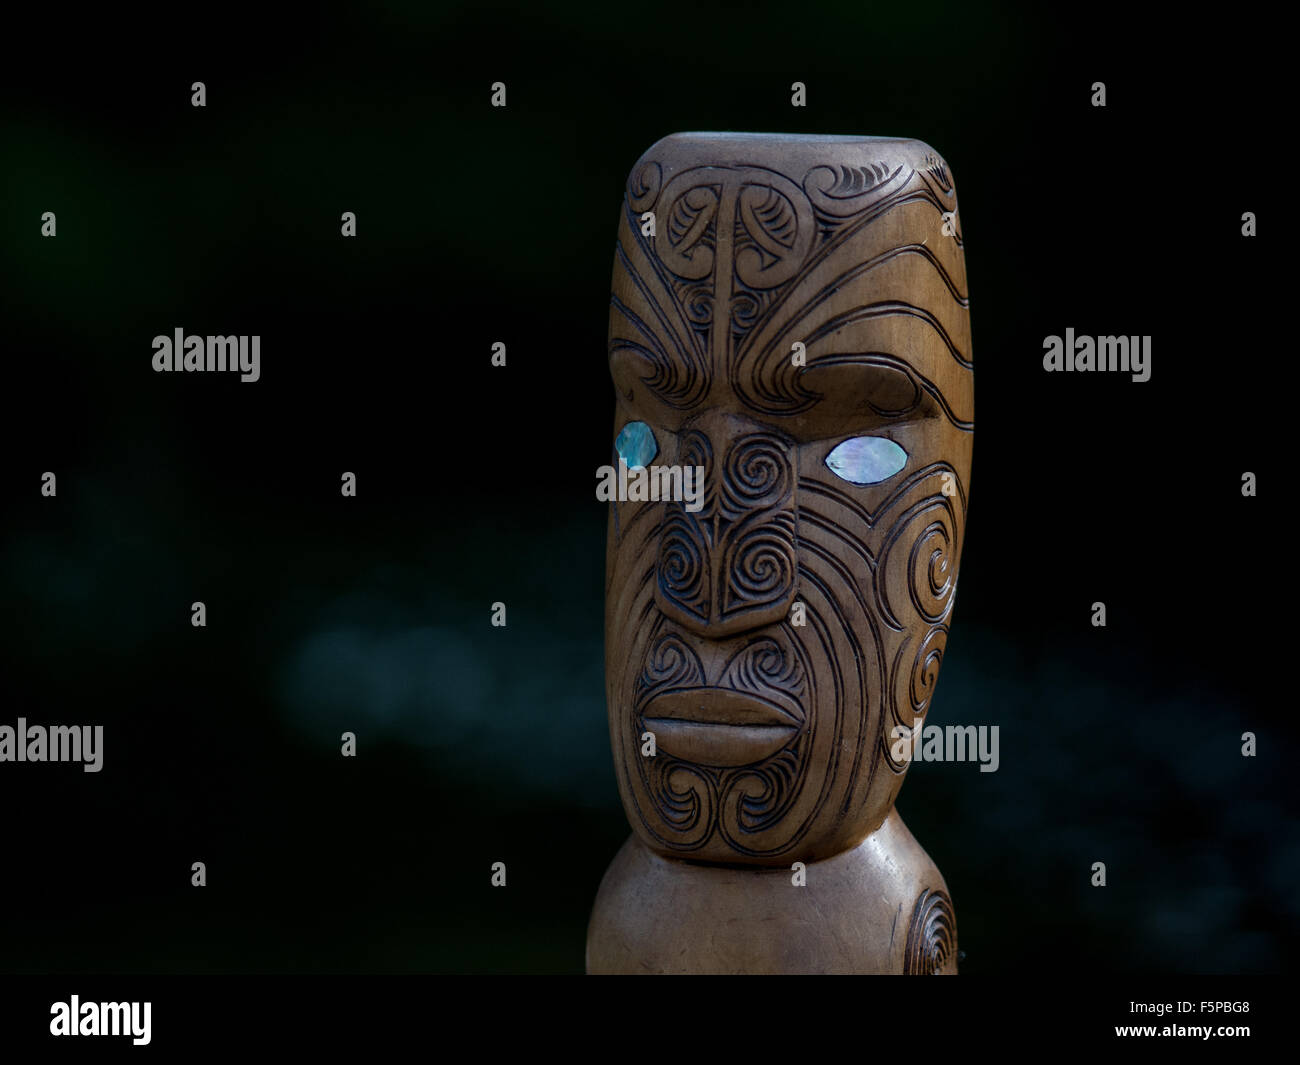 Maori God Warrior Ancestor with tattooed face Stock Photo